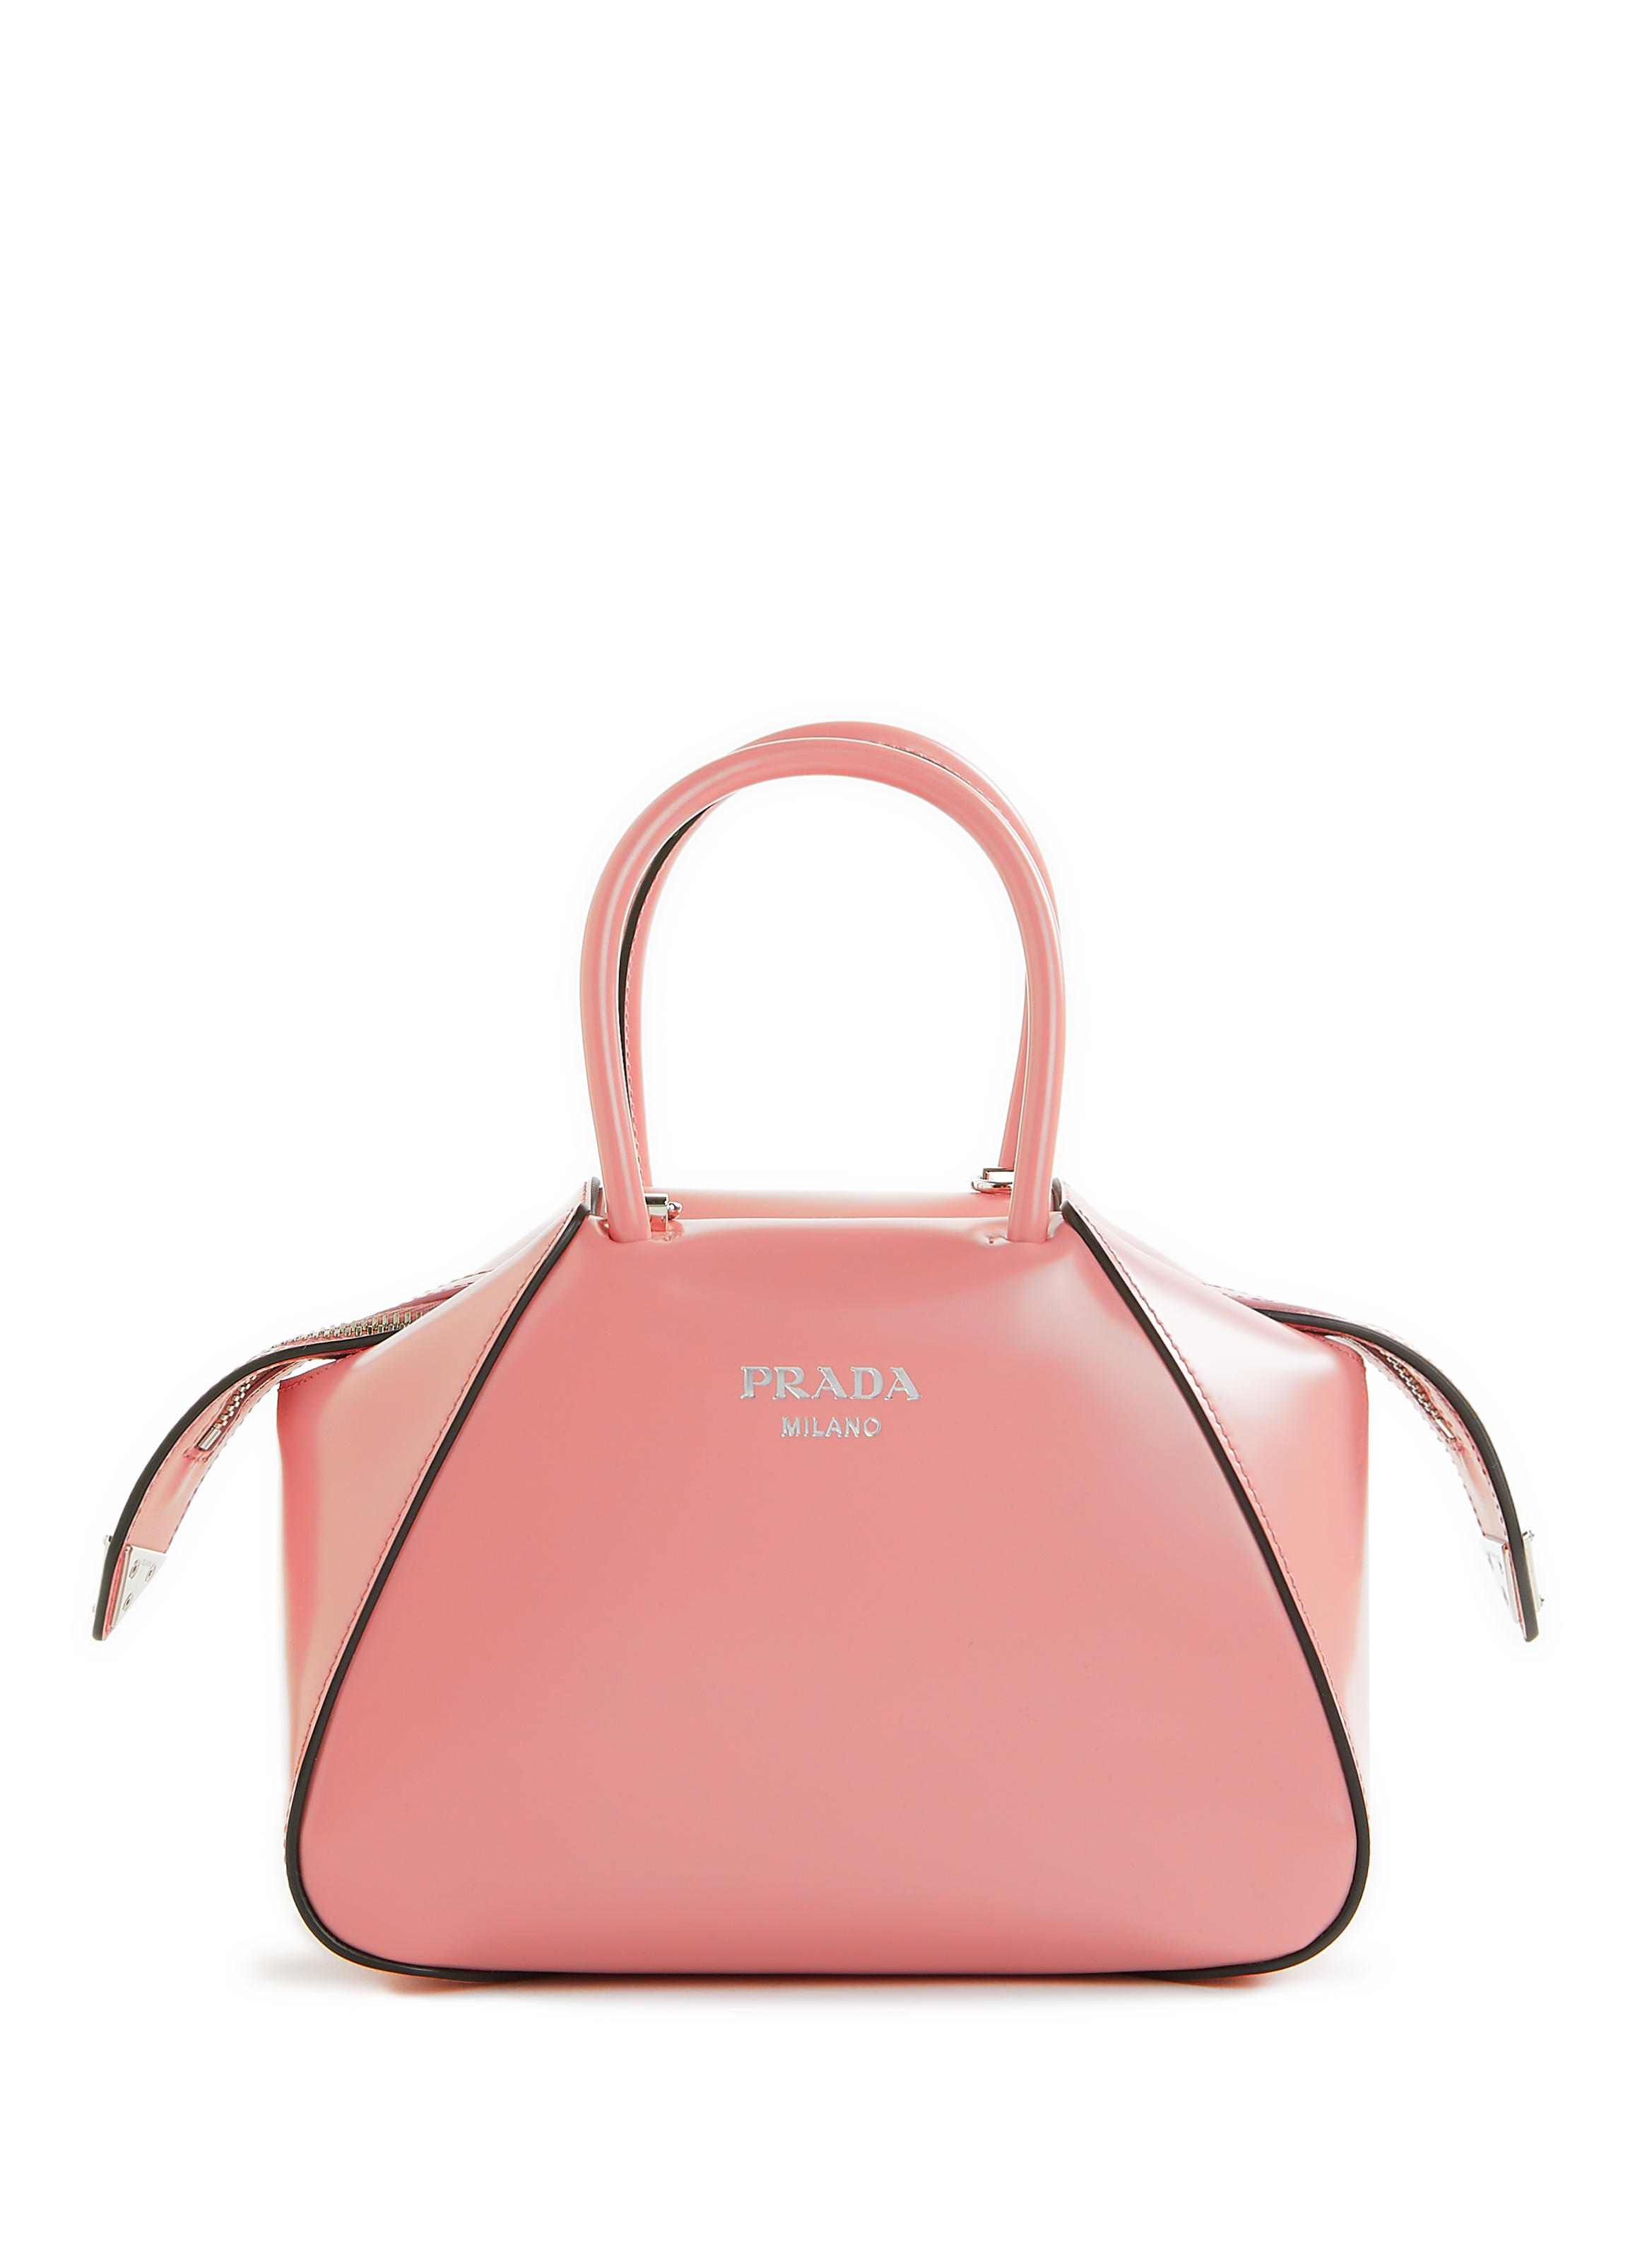 Prada Pink Saffiano Leather Mini Envelope Bag | myGemma | Item #136480